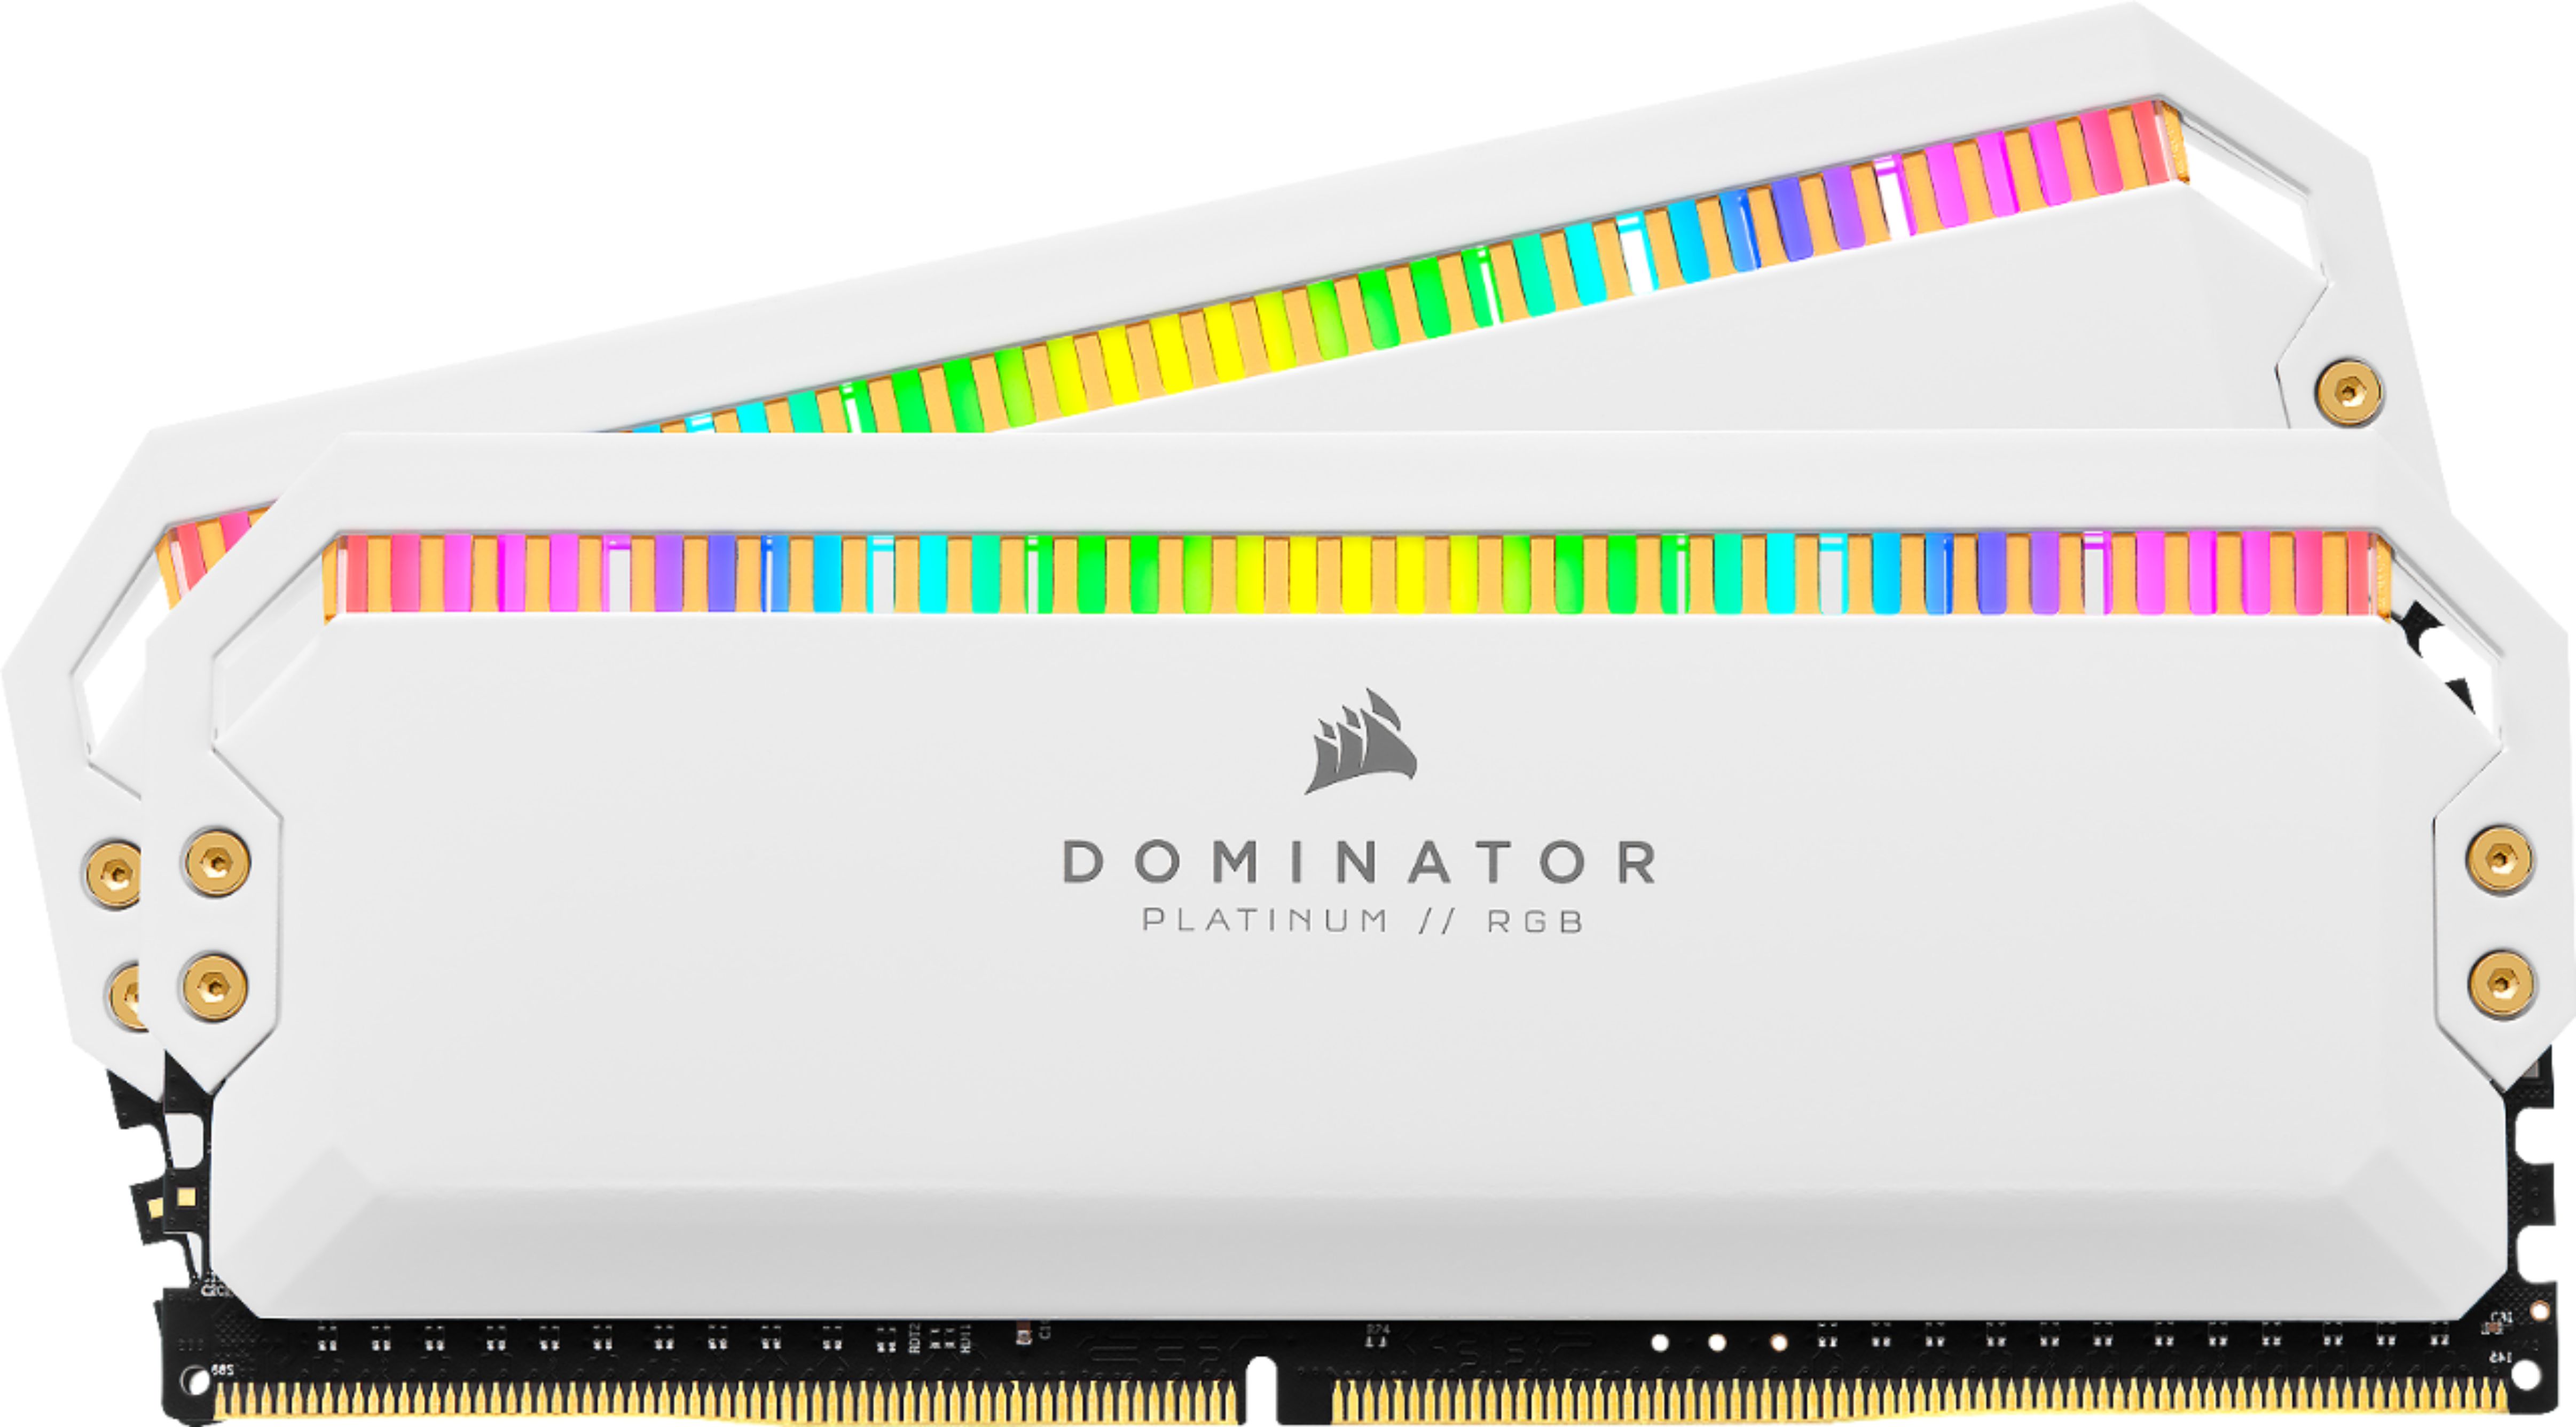 CORSAIR - Dominator® Platinum RGB XXGB (2 x 8GB) DDR4 3200MHz C16 Memory Kit - White